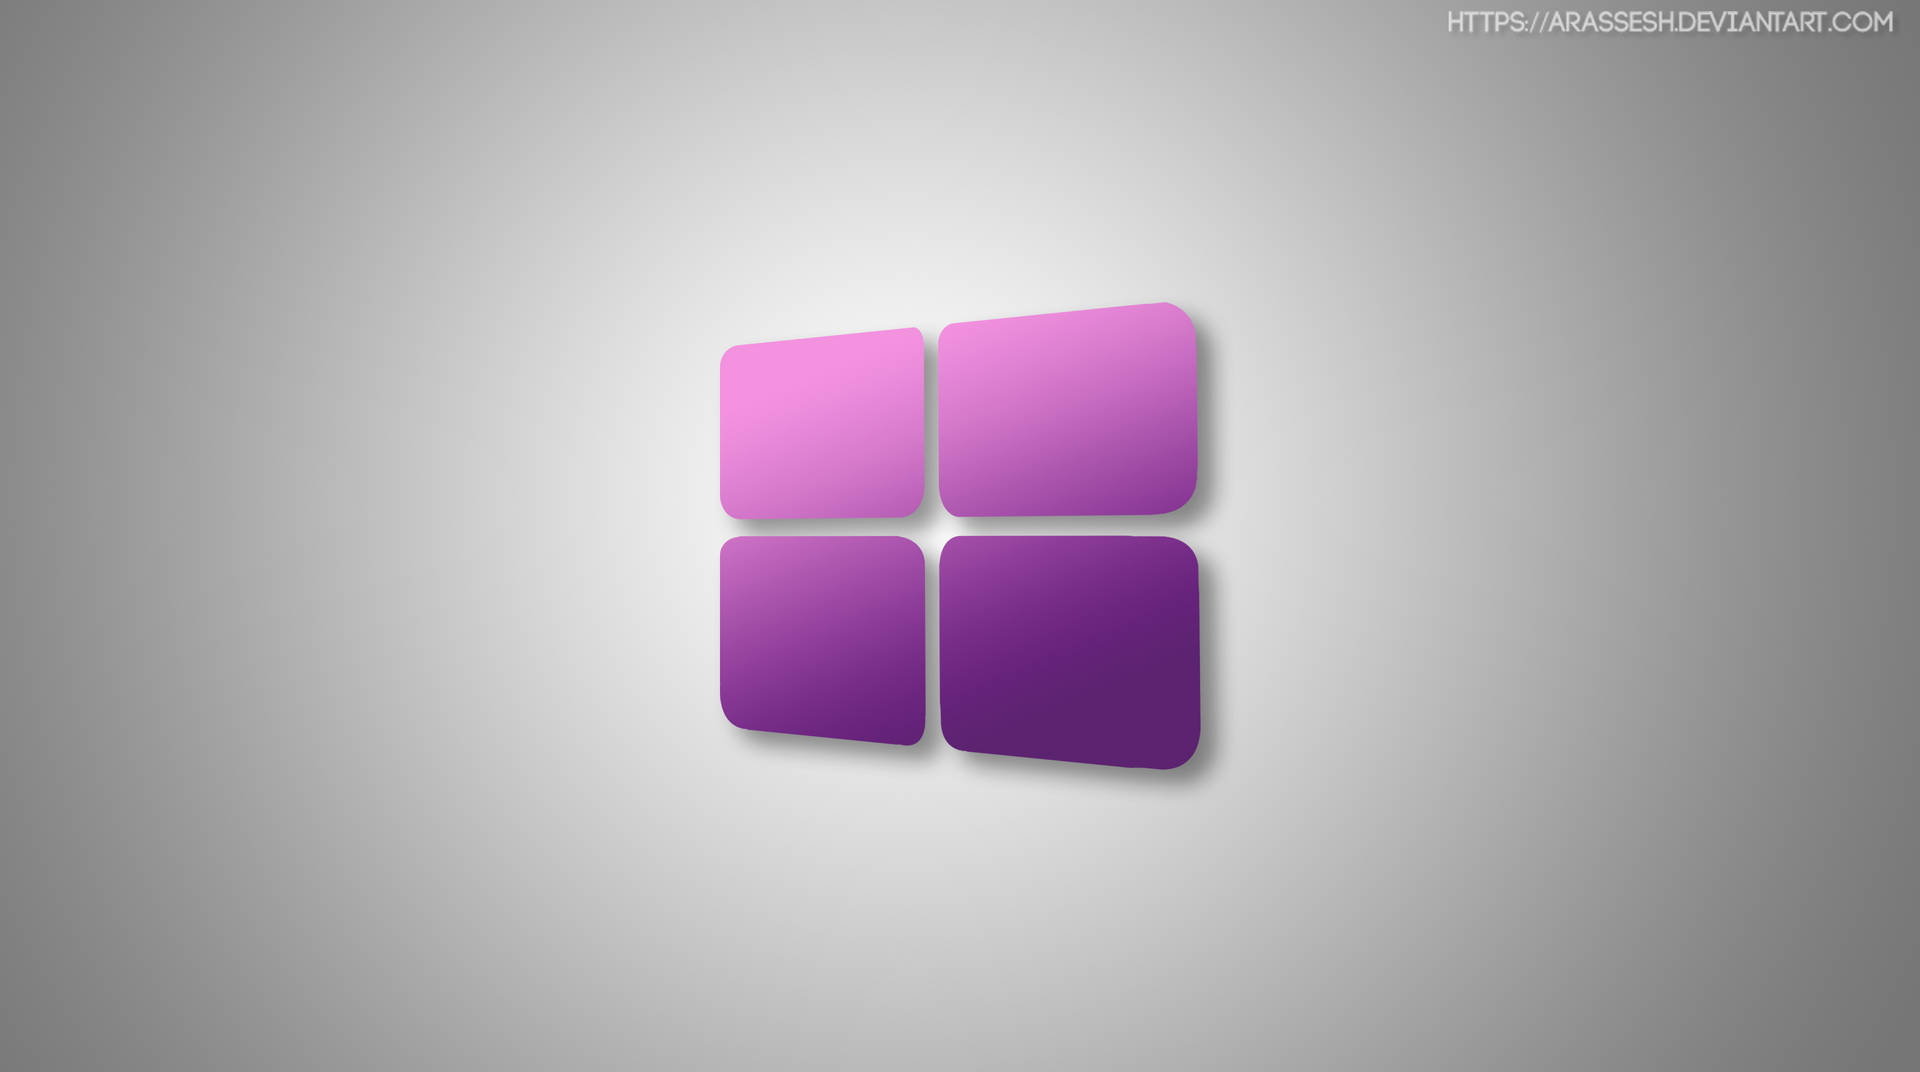 Minimalist Windows 10 Hd Purple Logo